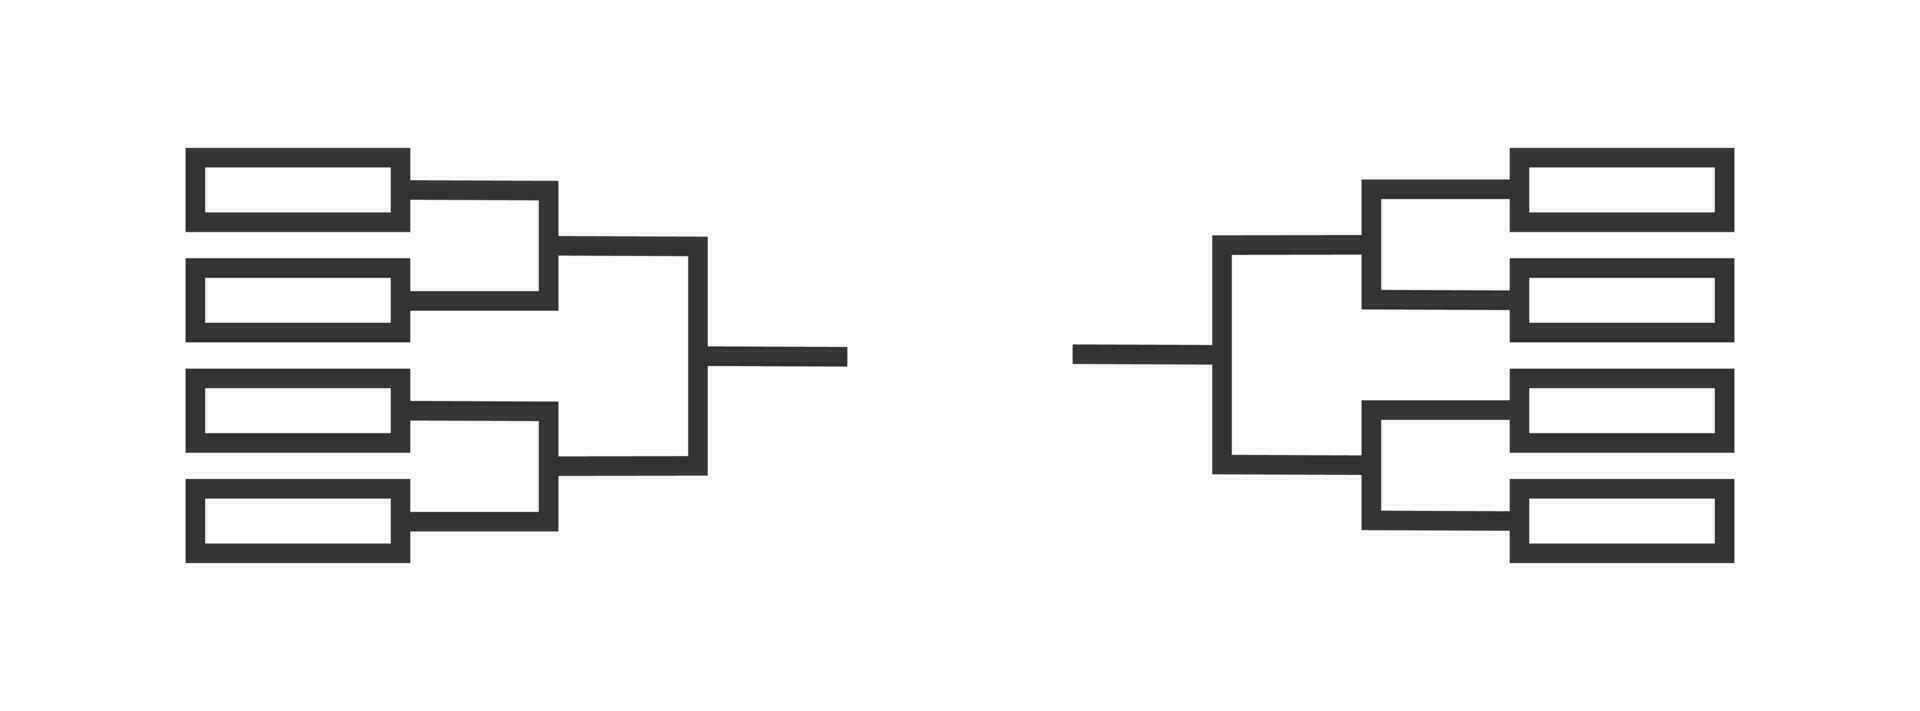 16 team tournament braket templates icon. Game diagram symbol. Sign  blank vector. vector